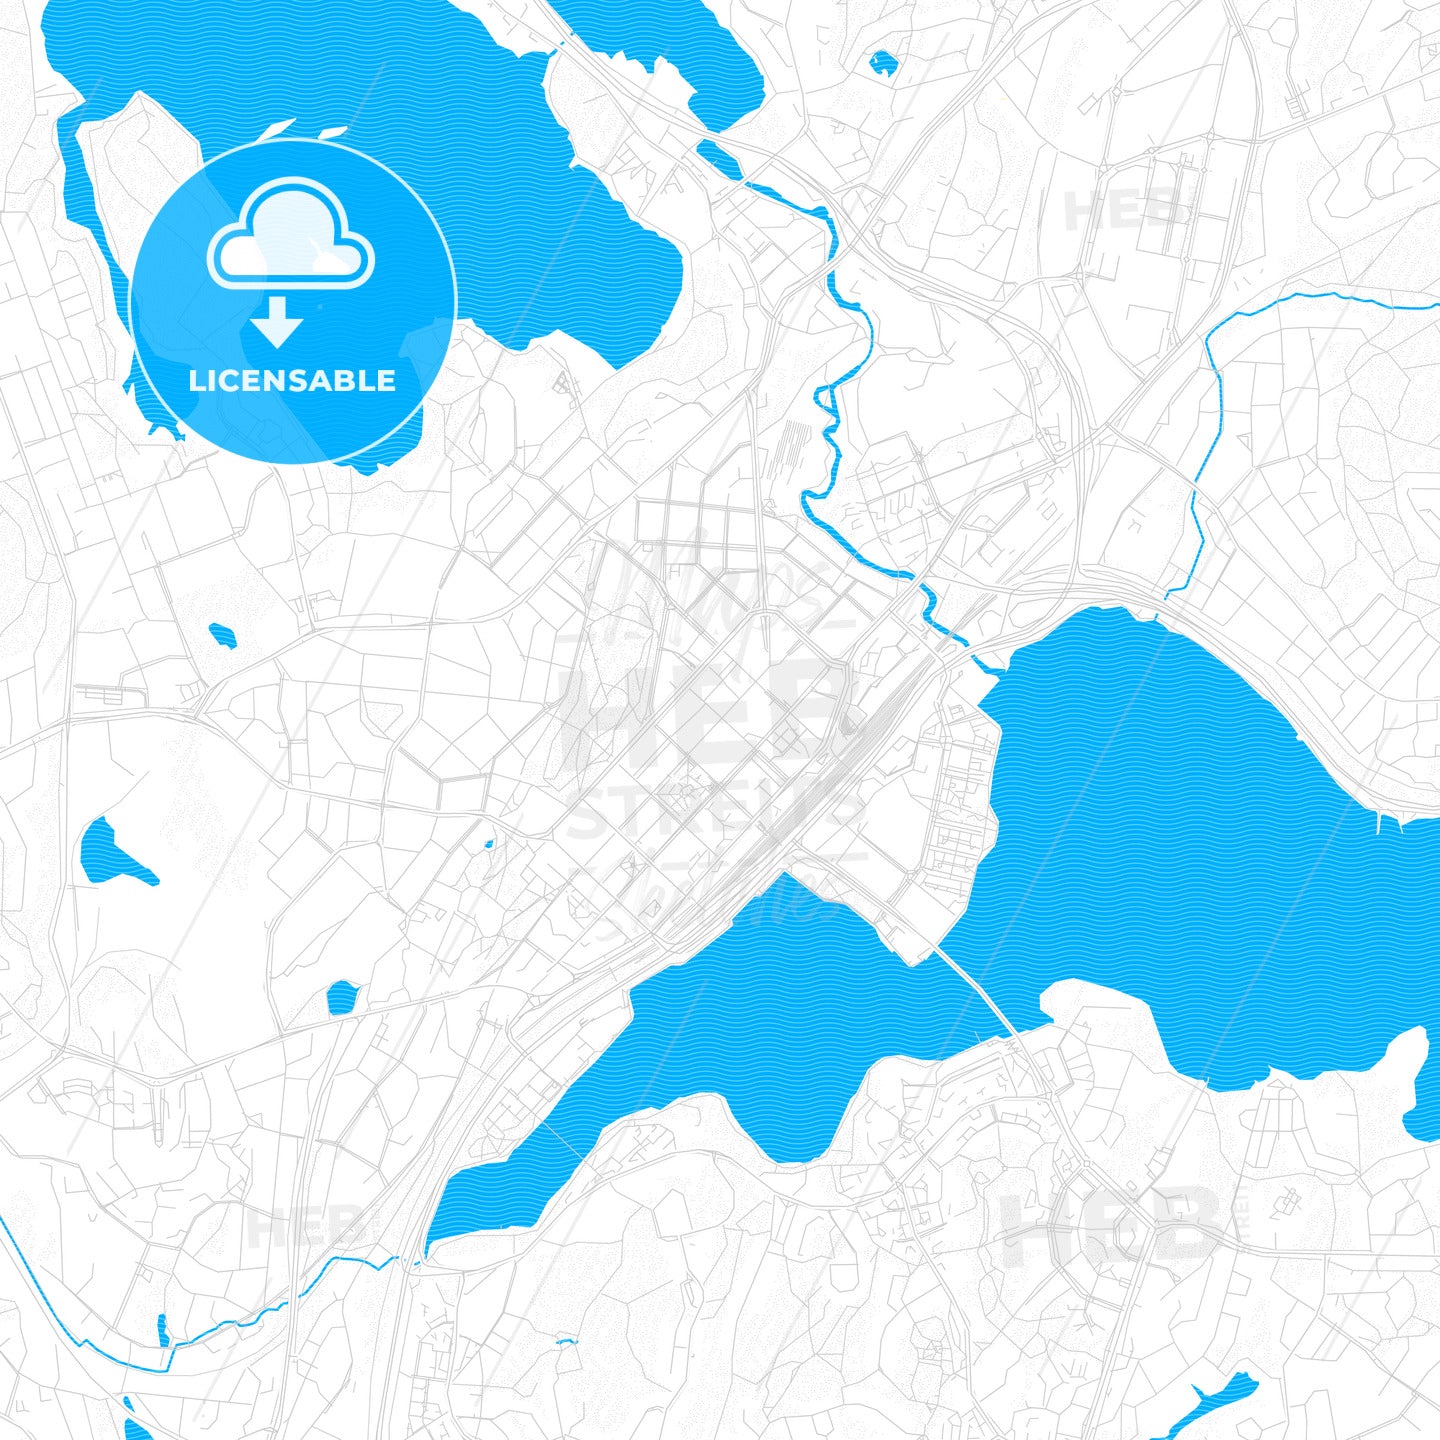 Jyväskylä, Finland PDF vector map with water in focus